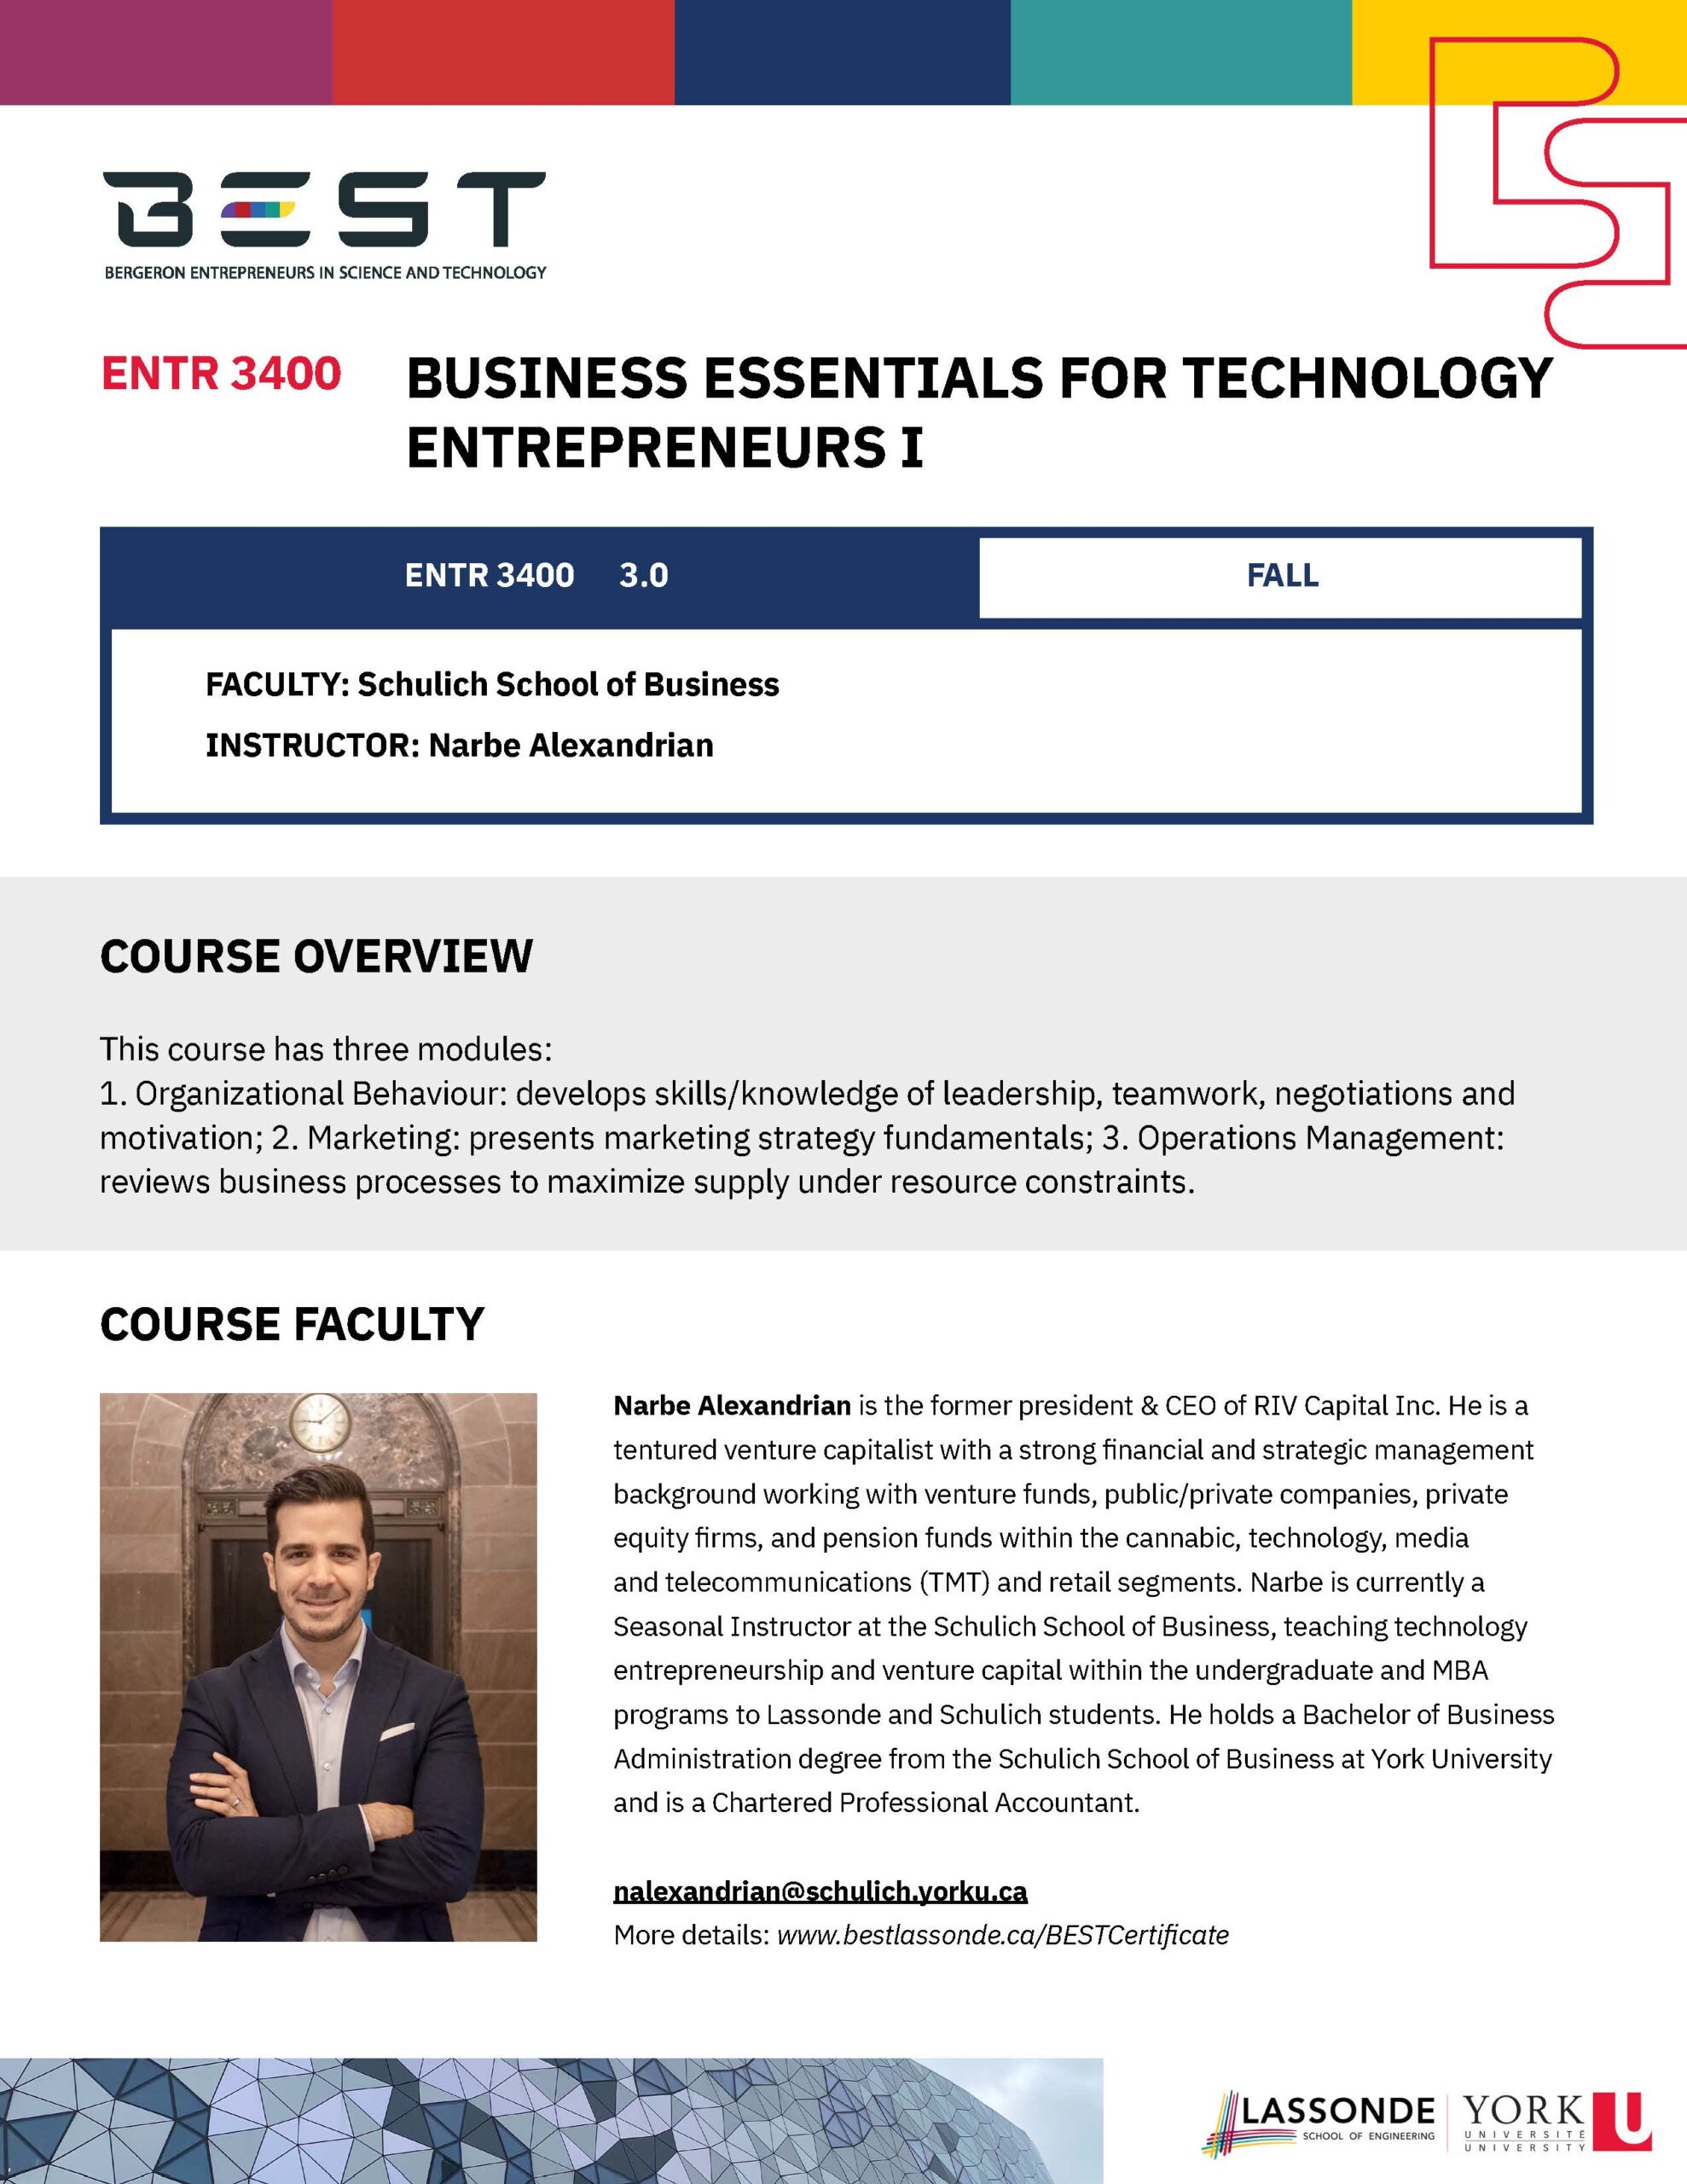 ENTR 3400 
Business Essentials for Technology Entrepreneurs I (poster)